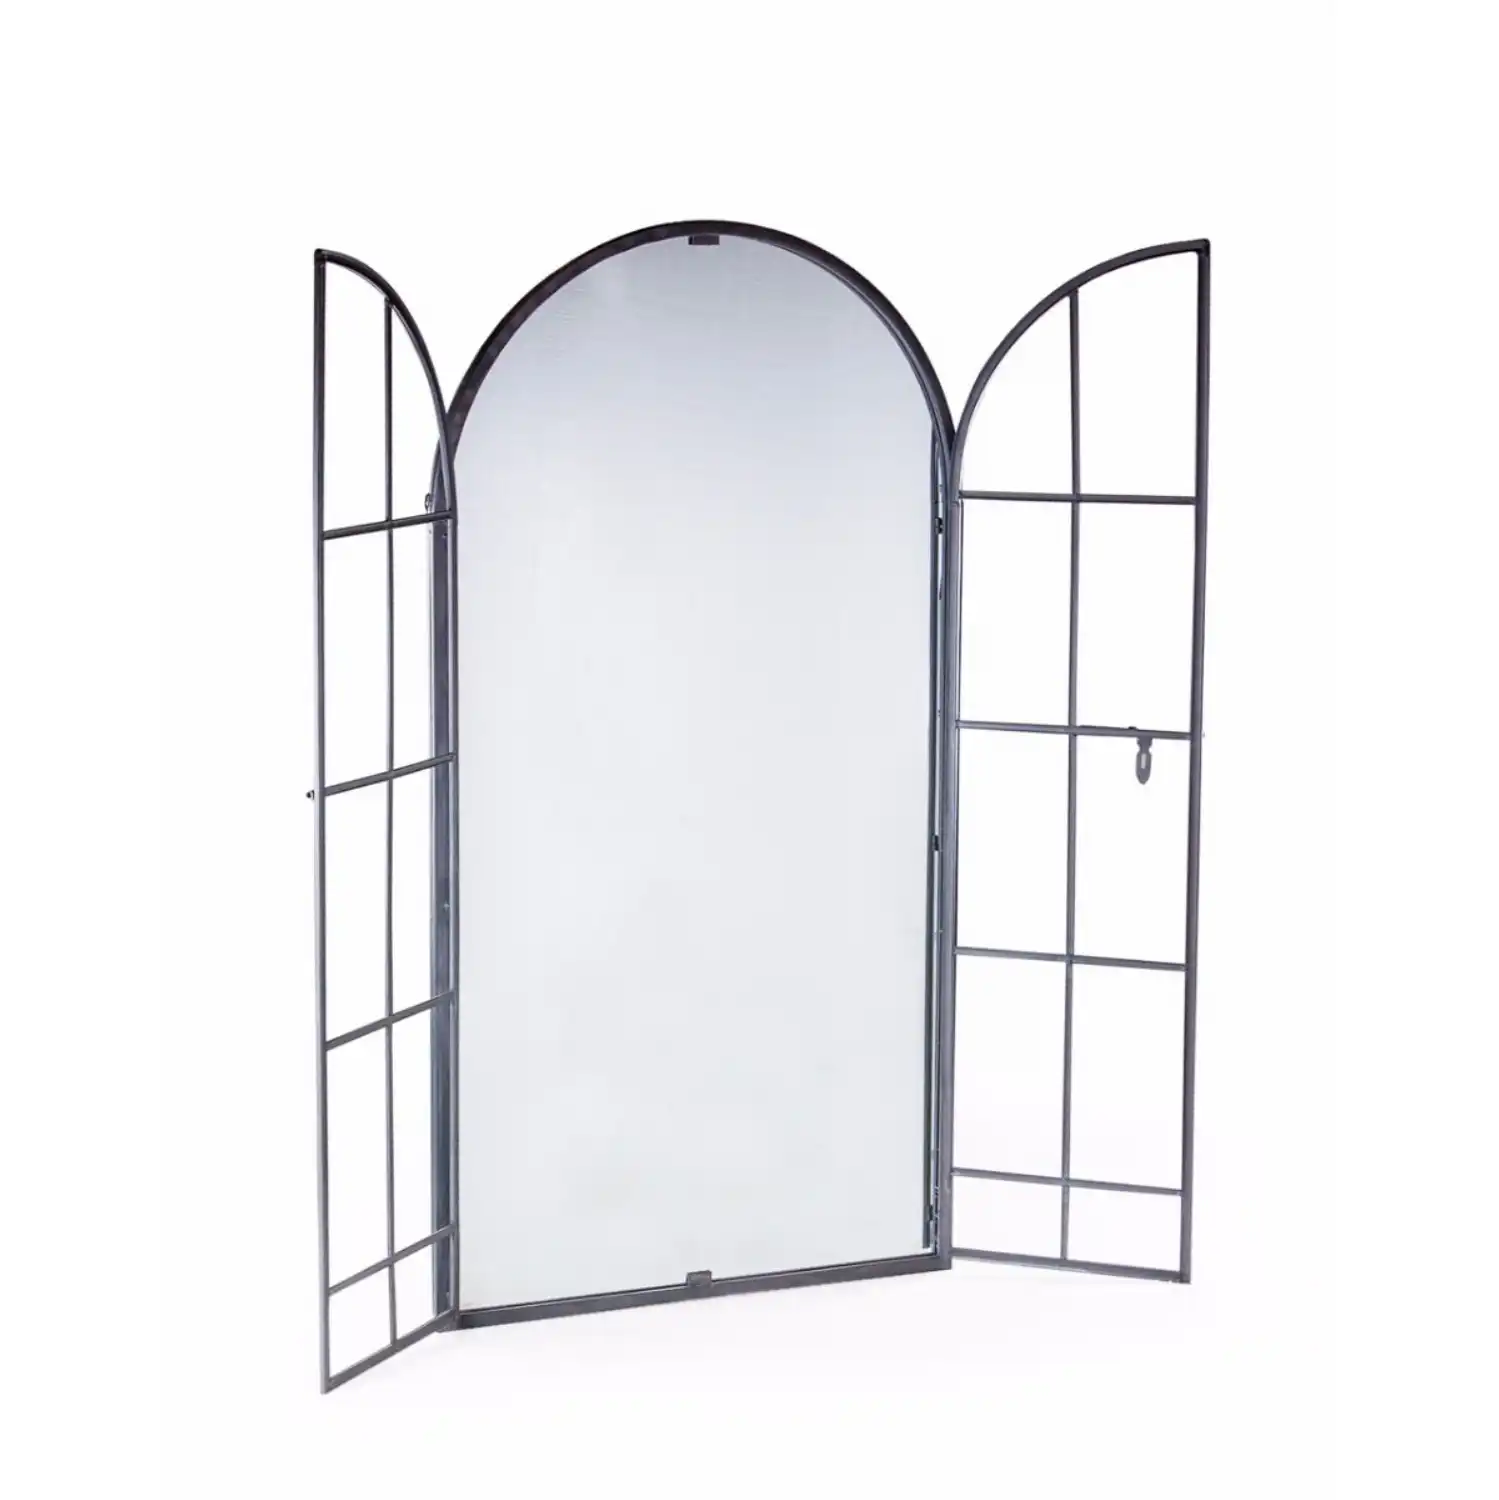 Tall Grey Rustic Metal Arched Window Wall Mirror